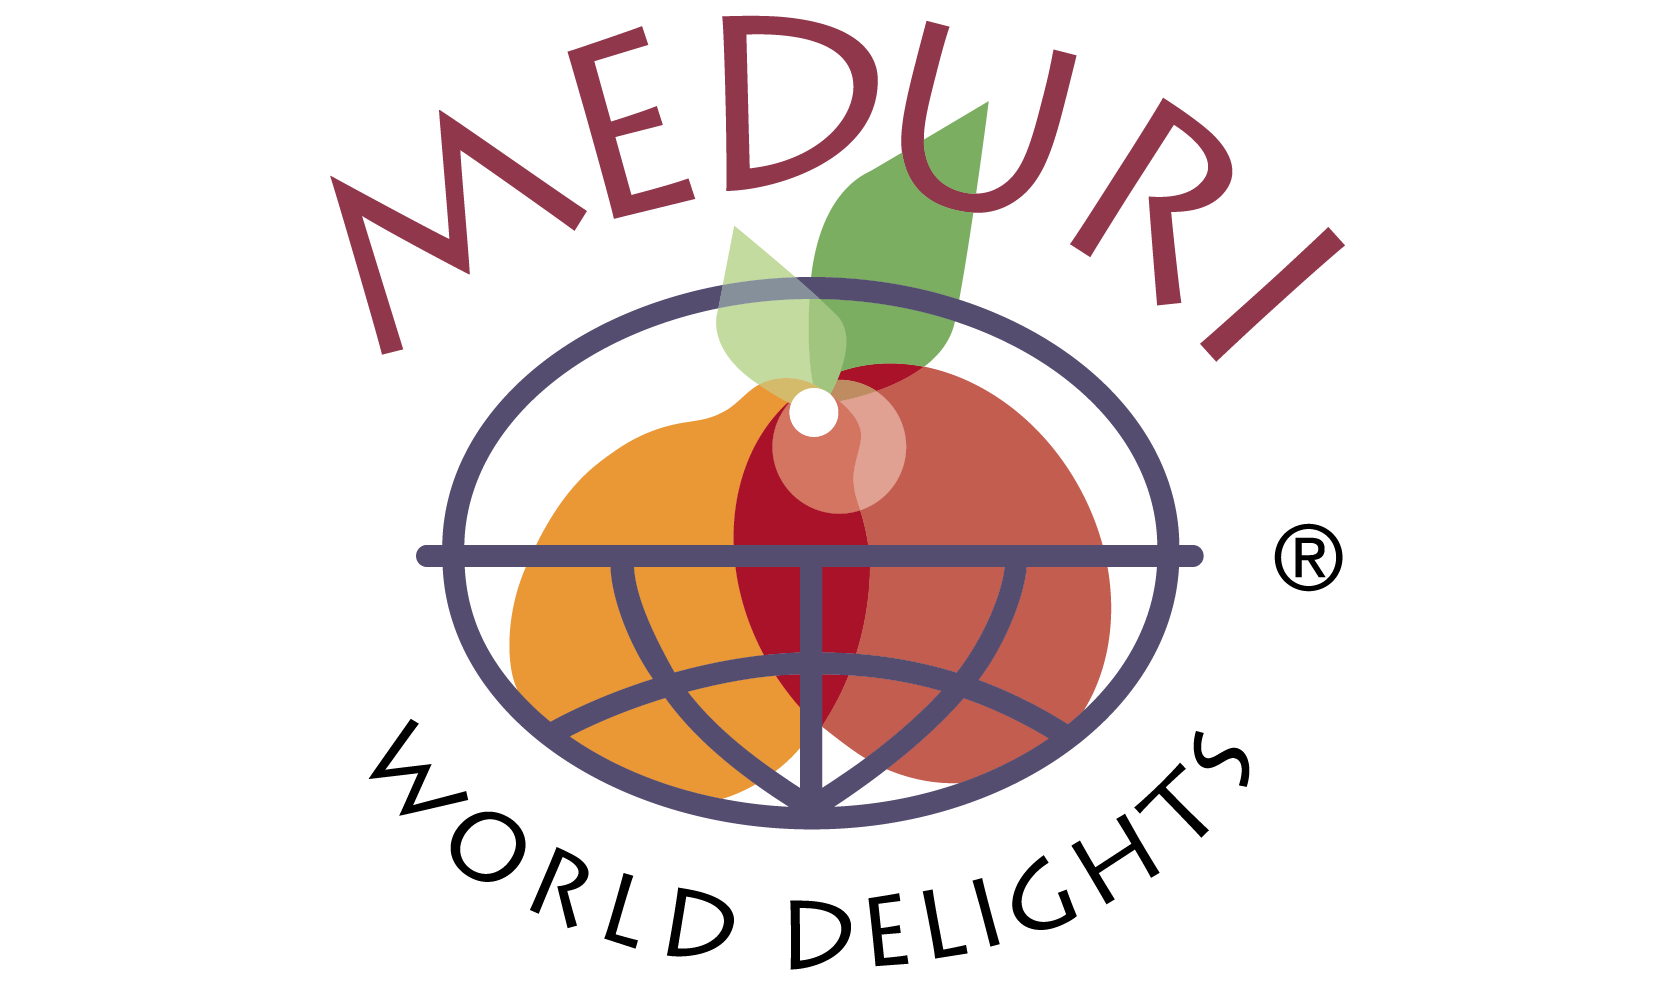 meduri world delights logo